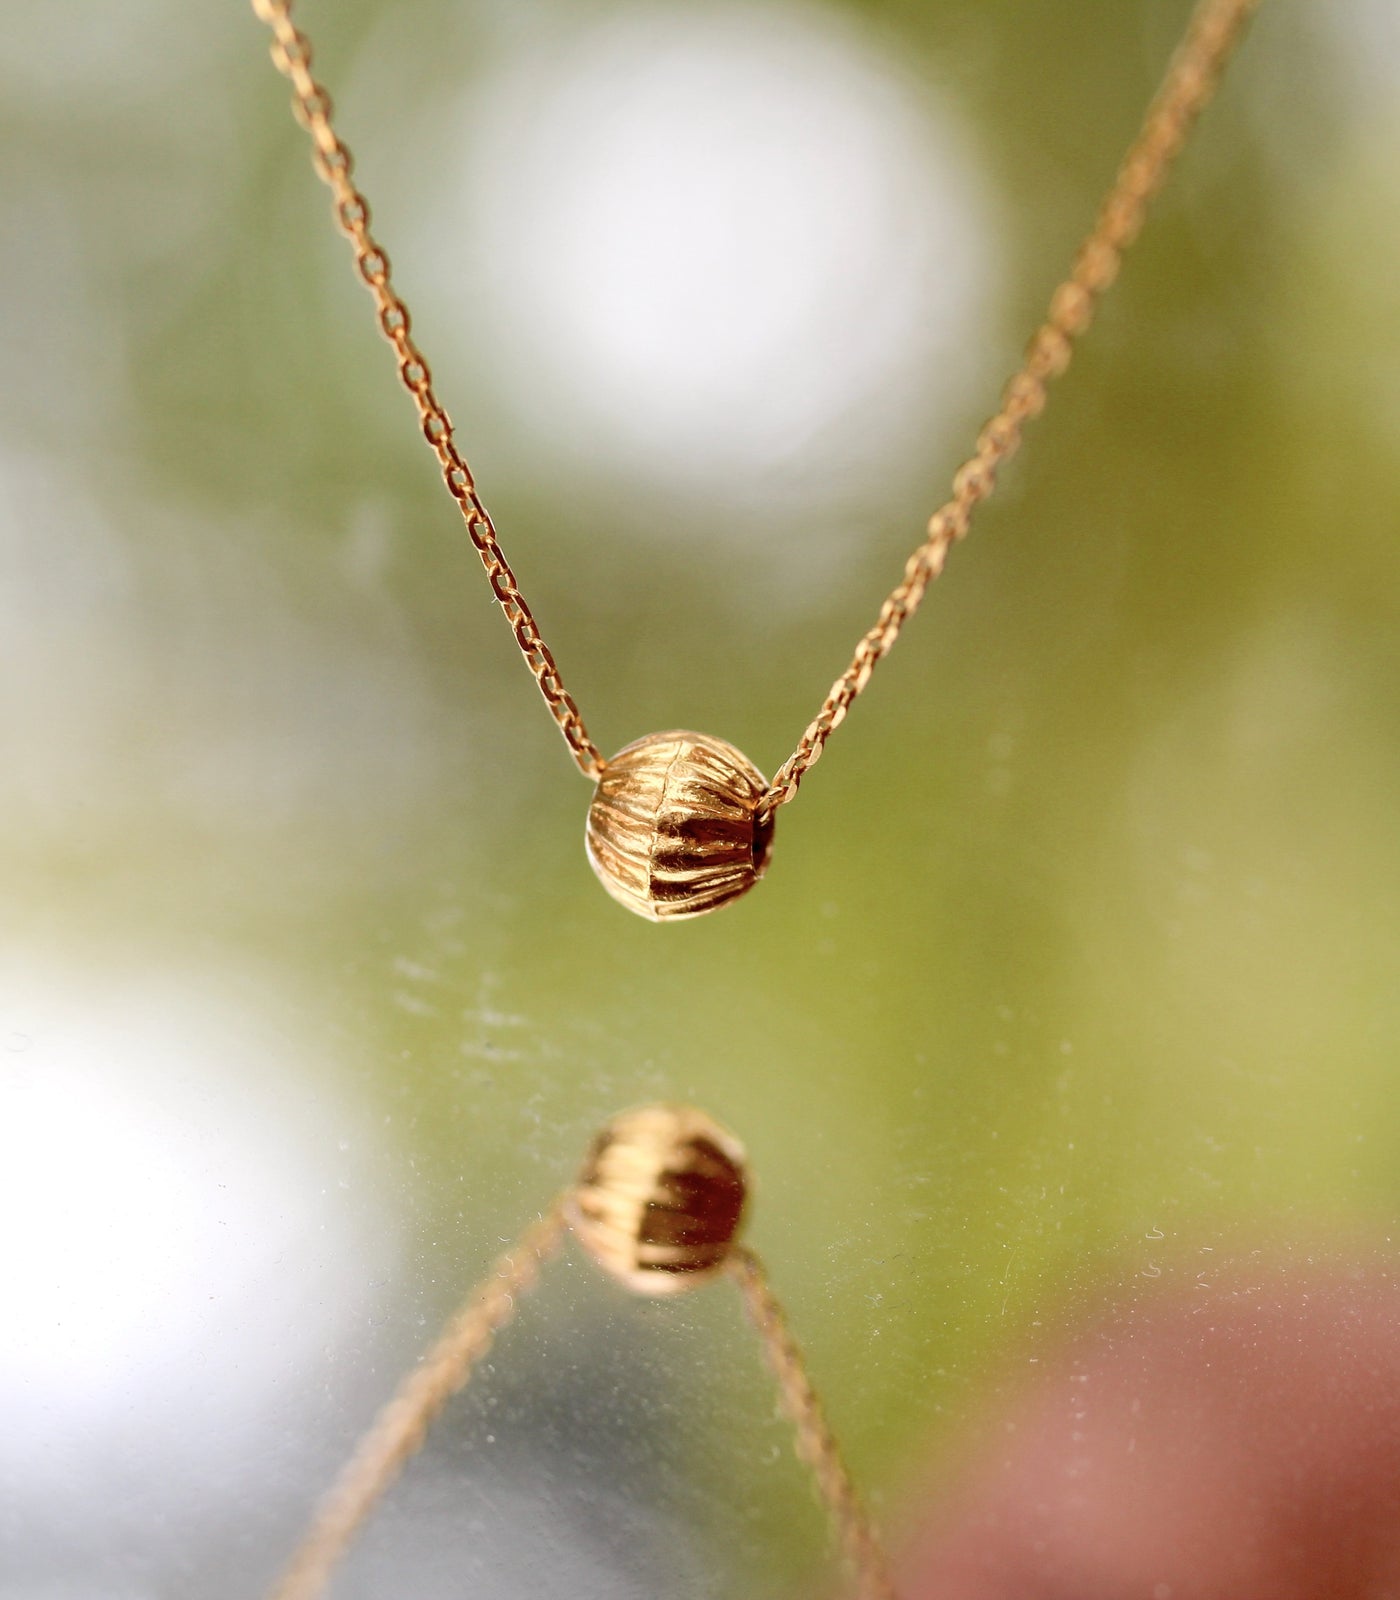 Daligan Chain Pendant Necklace - AMAMI